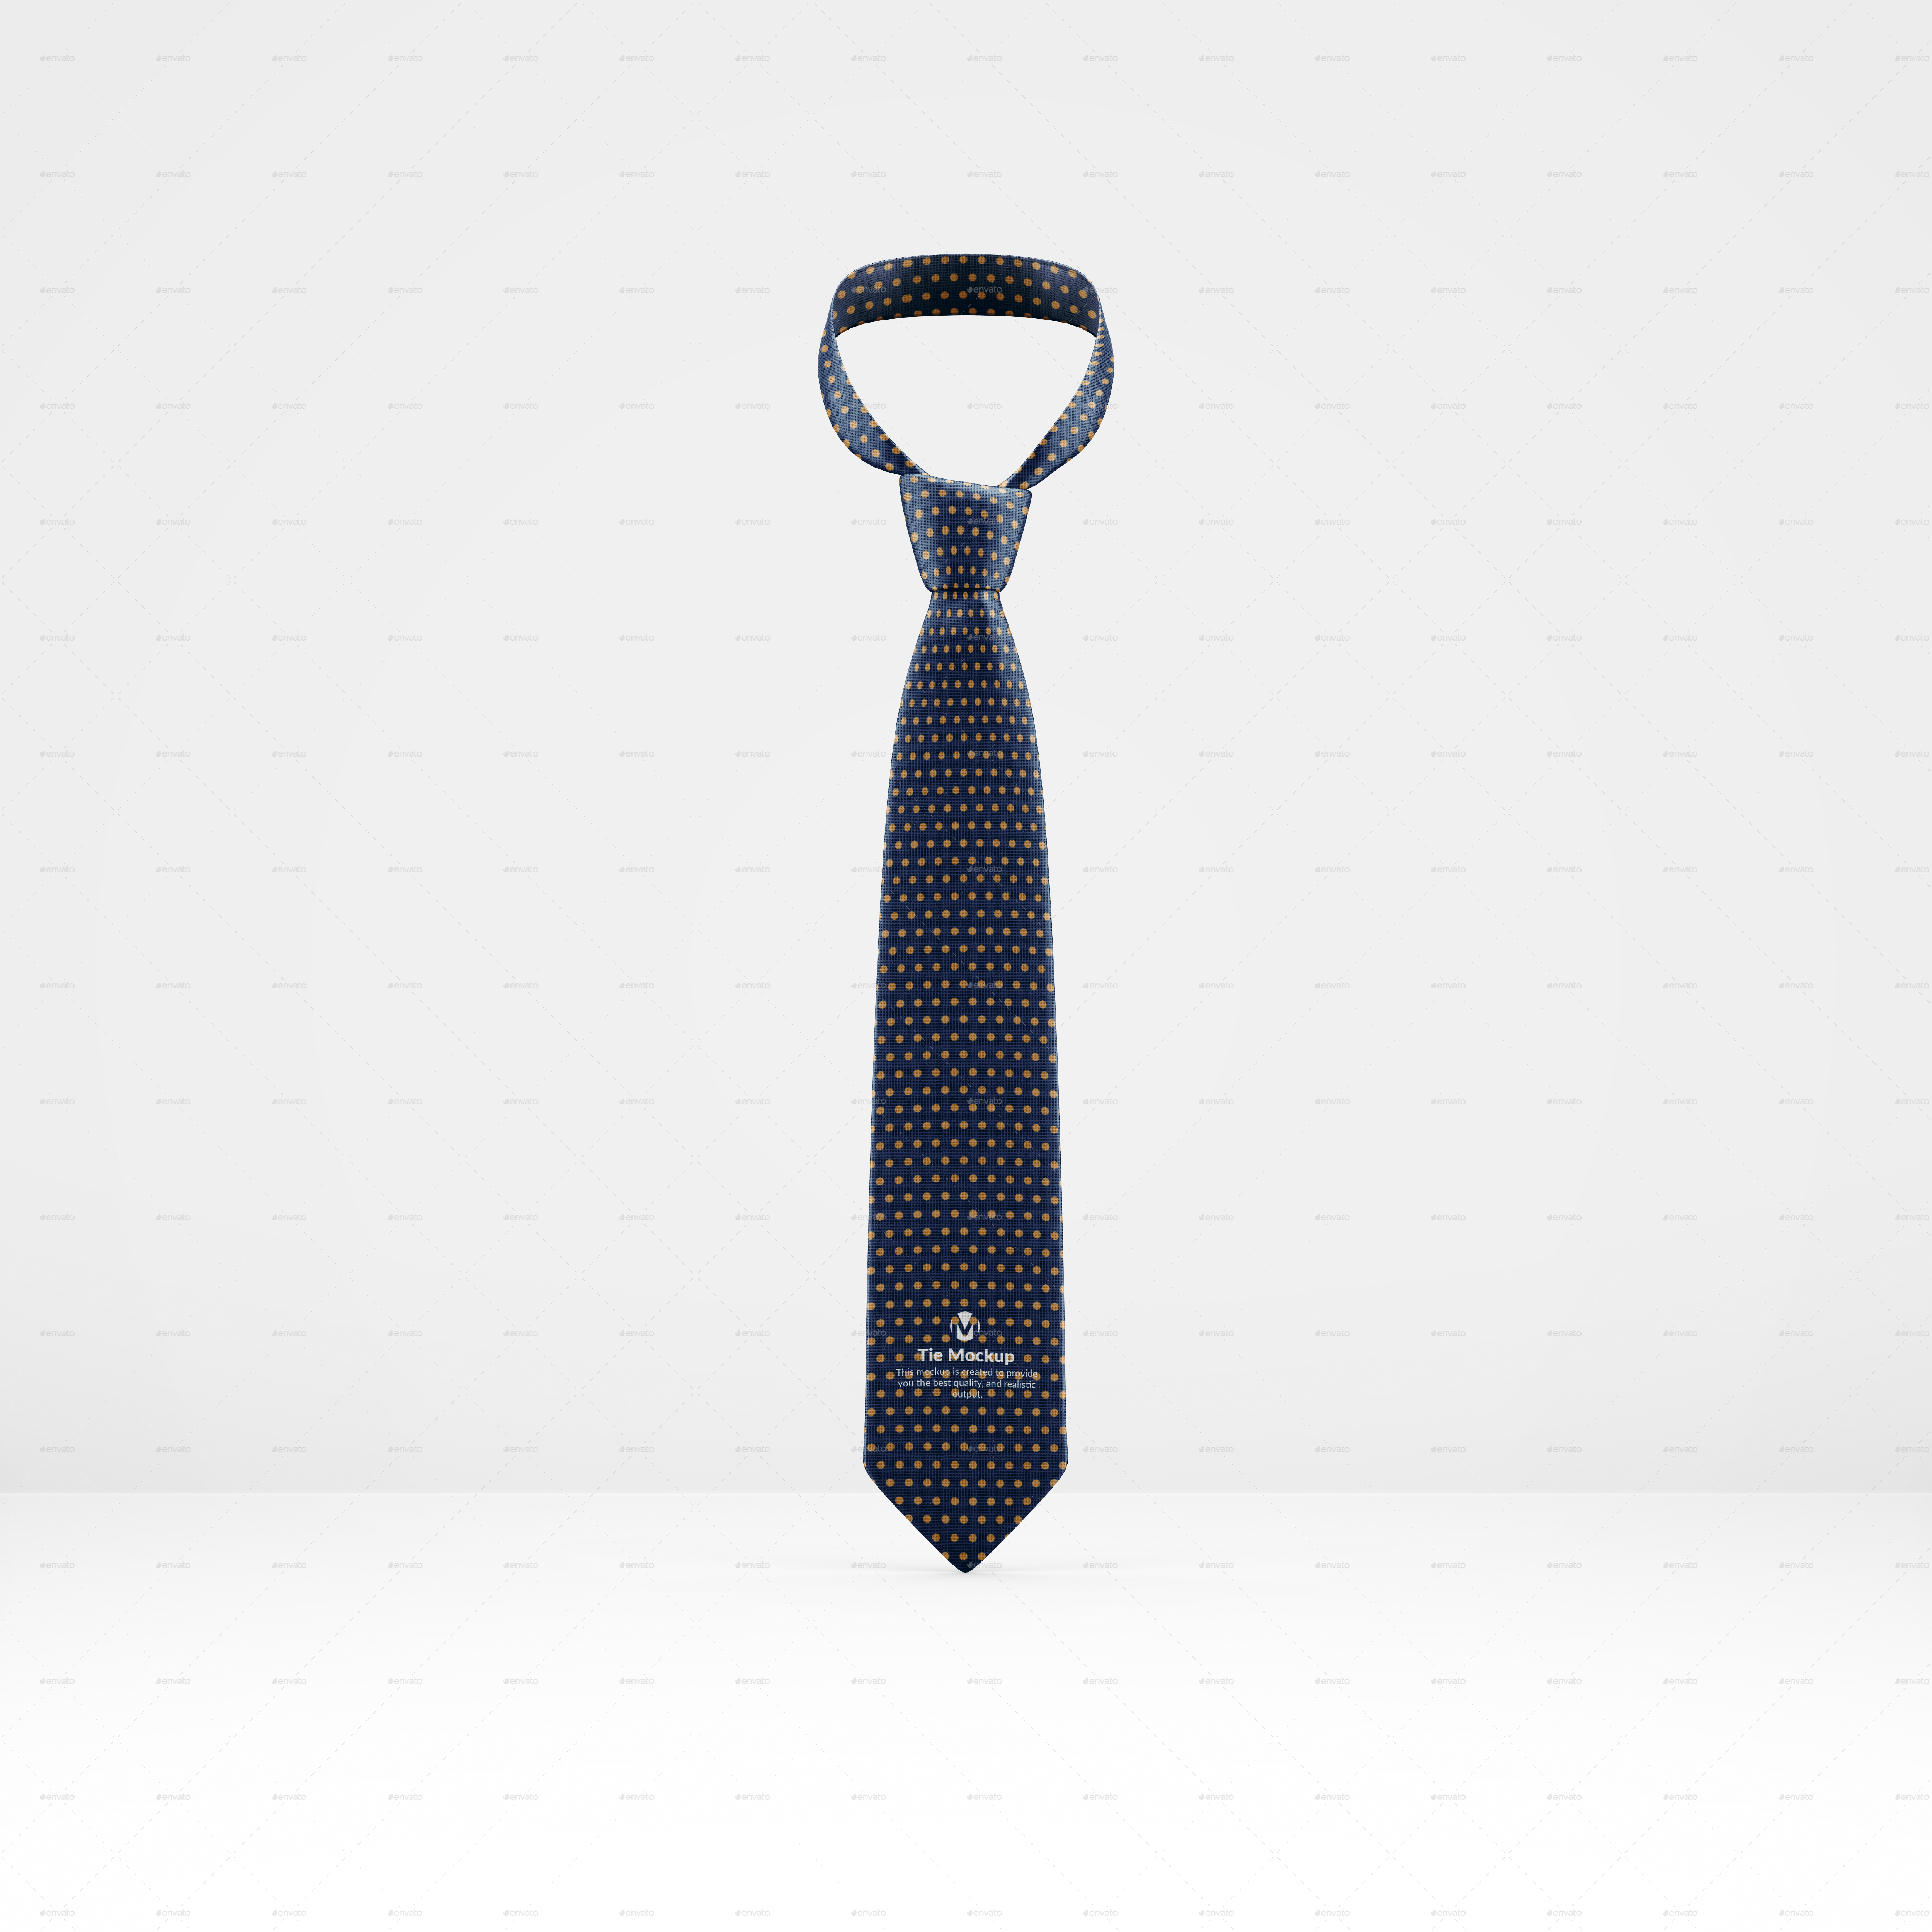 Download Neck Tie Mockup By Graphicdesigno Graphicriver